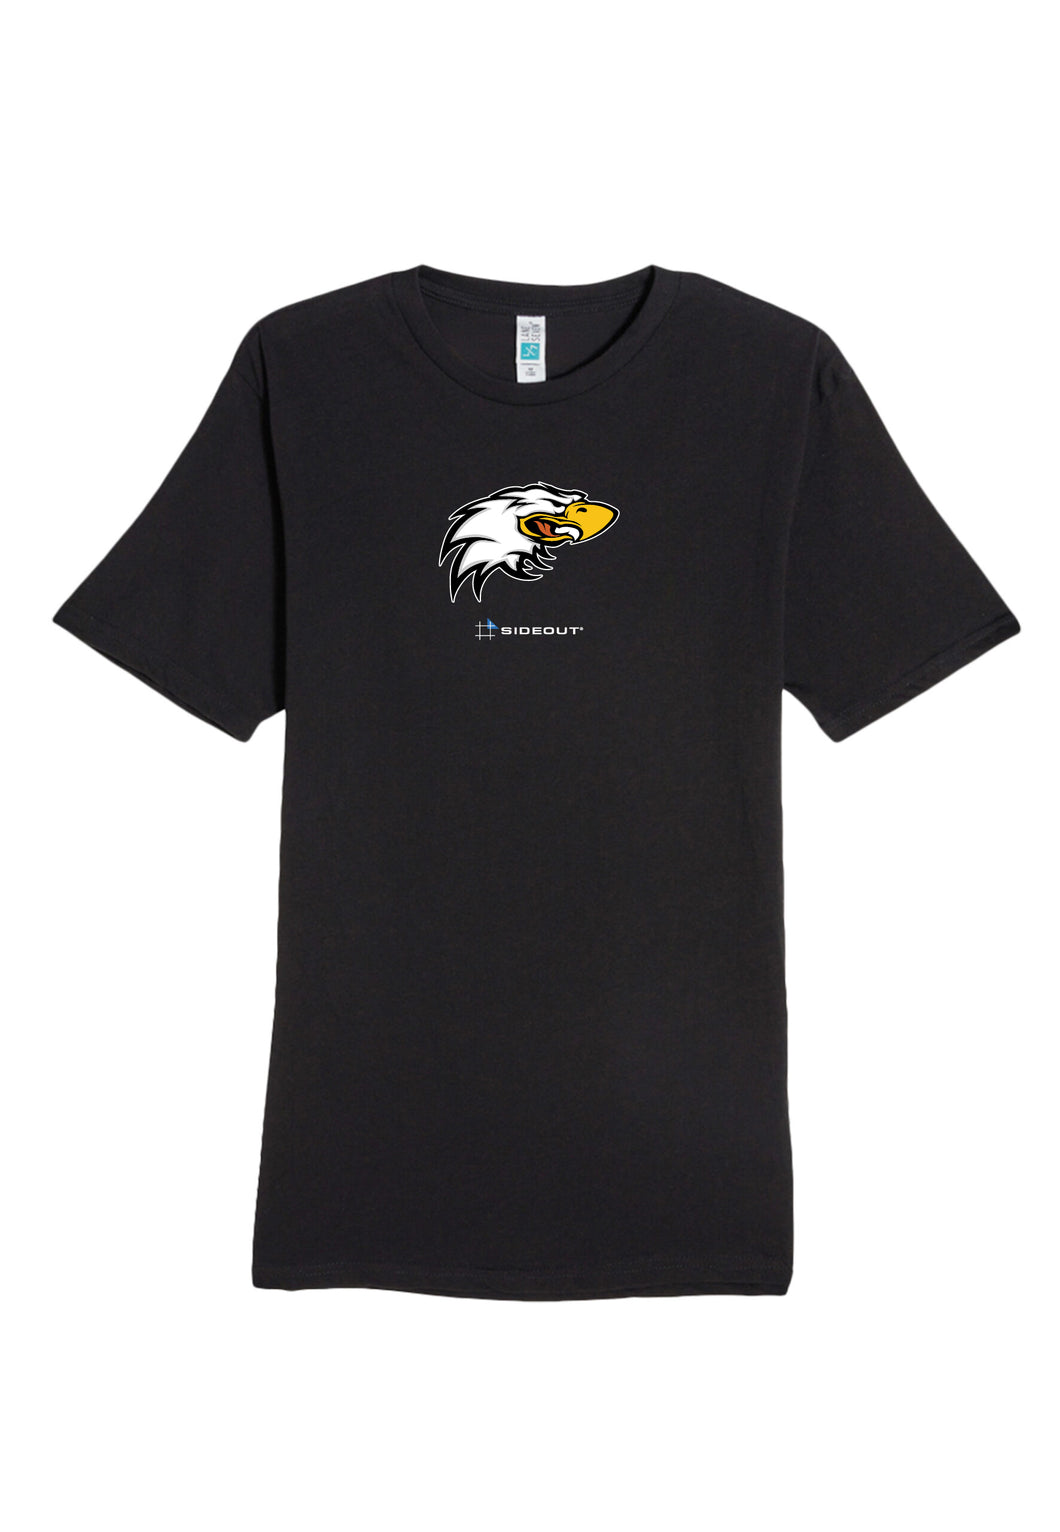 Tier One Basic Black Unisex T-Shirt